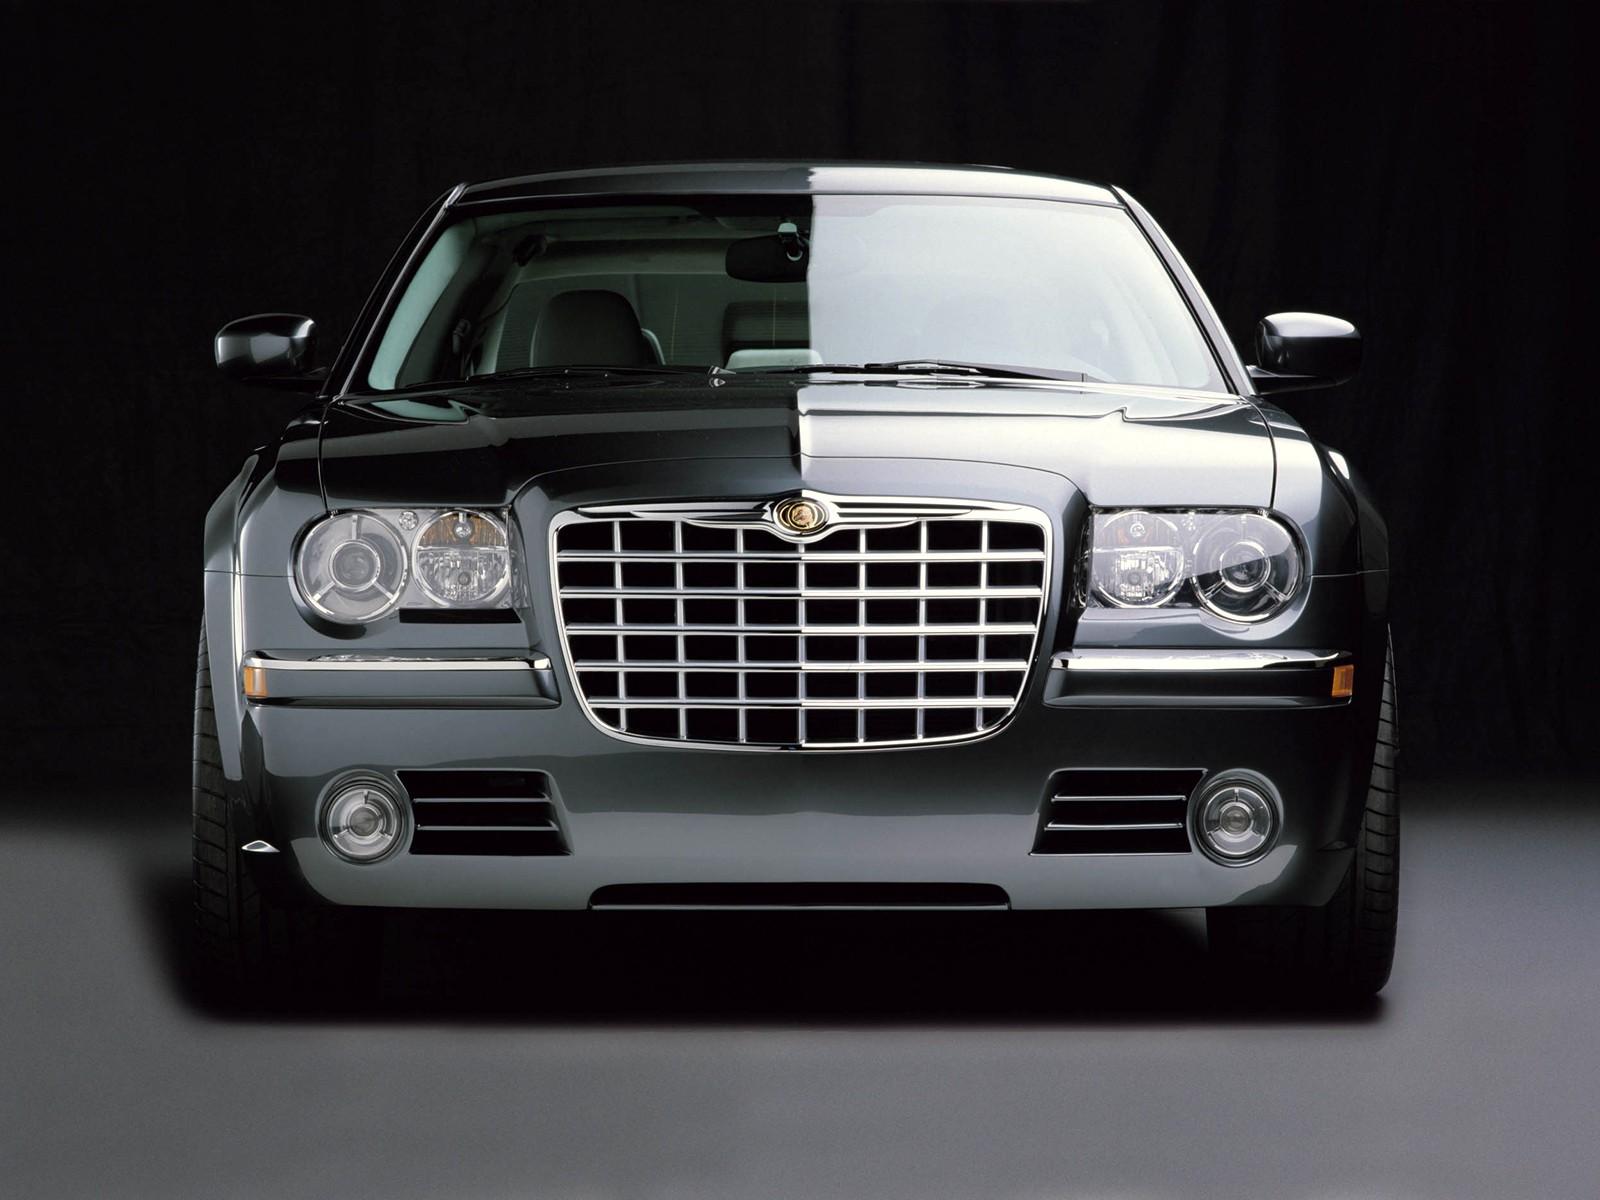 Chrysler Cars 37 Widescreen Wallpapers